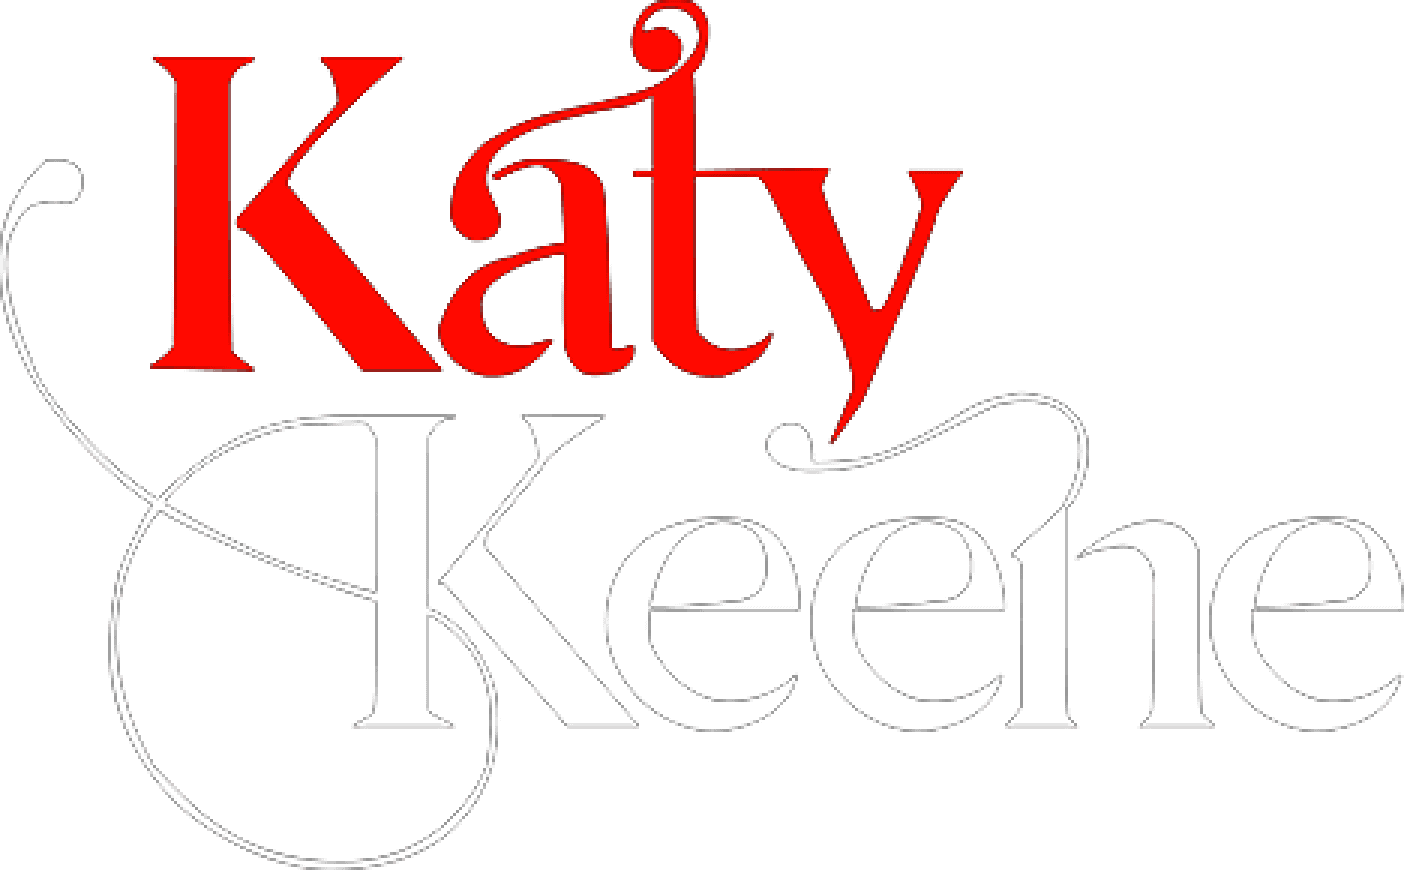 Katy Keene logo